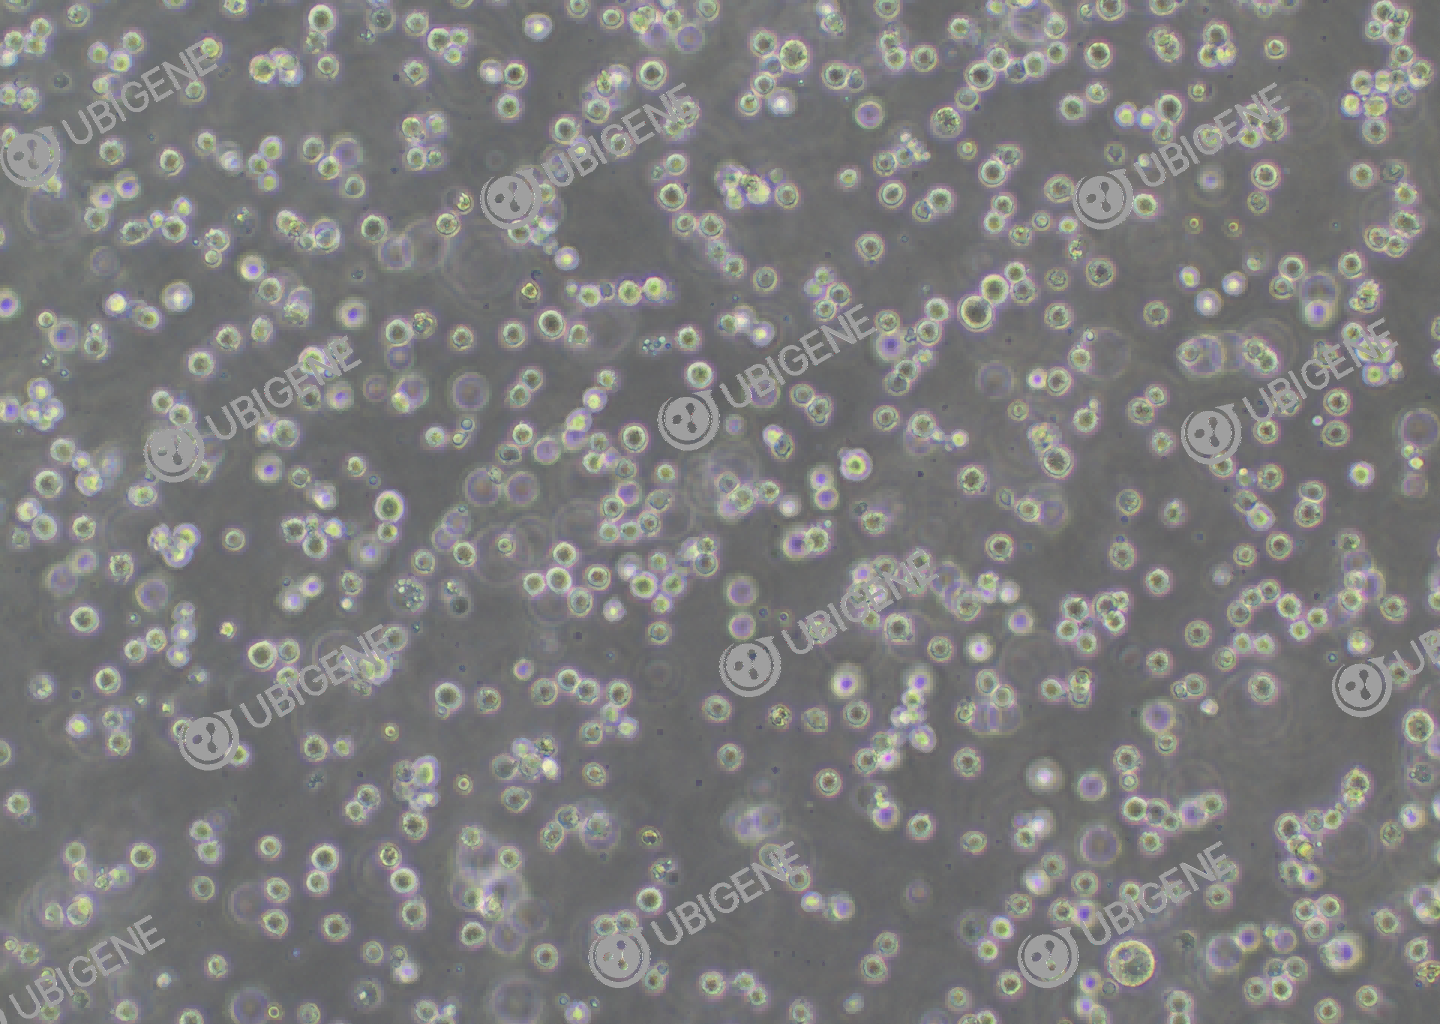 K-562 cell line Cultured cell morphology